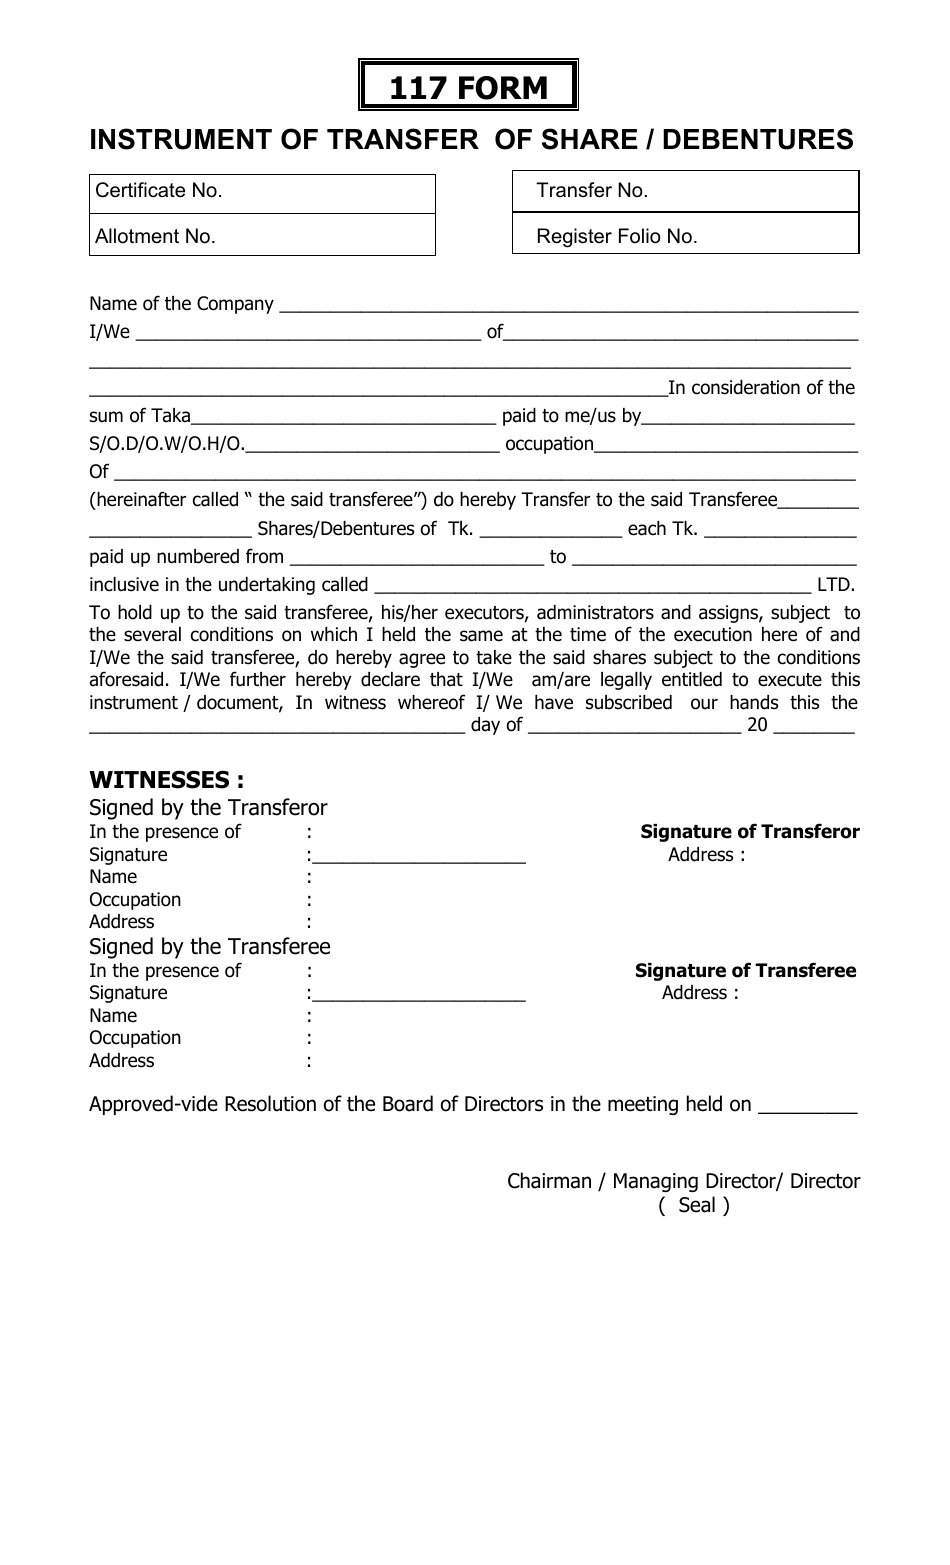 Form 117 Instrument of Transfer of Share / Debentures - Bangladesh, Page 1